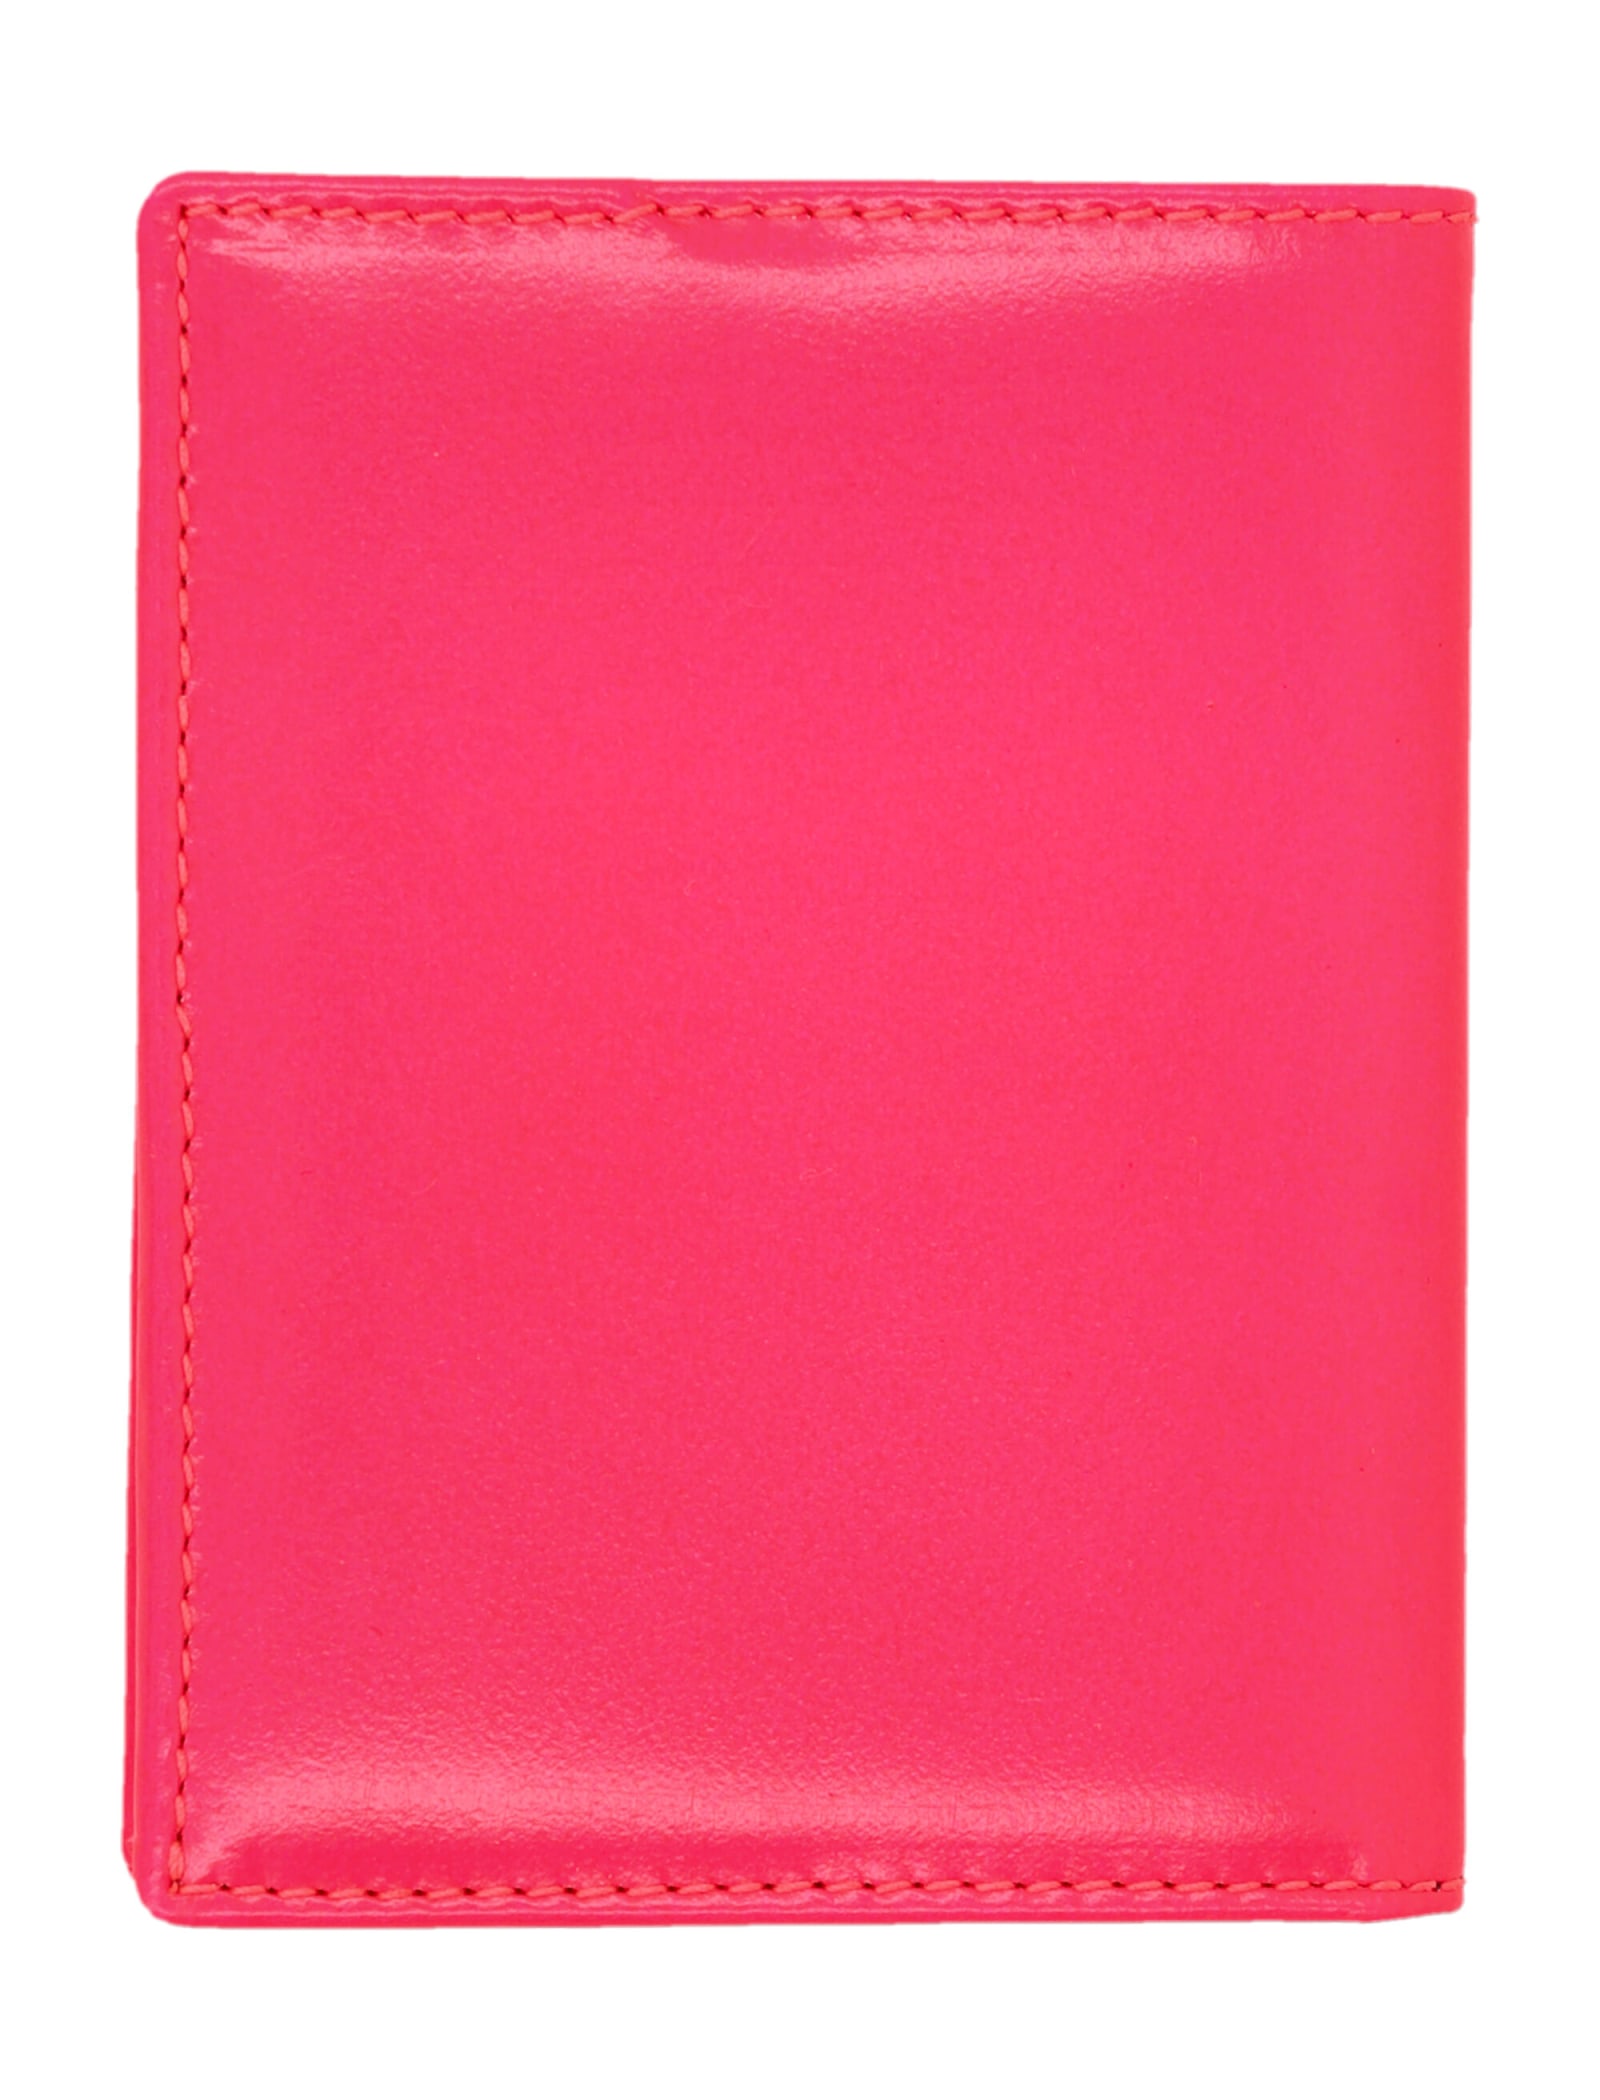 Shop Comme Des Garçons Super Fluo Cardholder In Pink/yellow